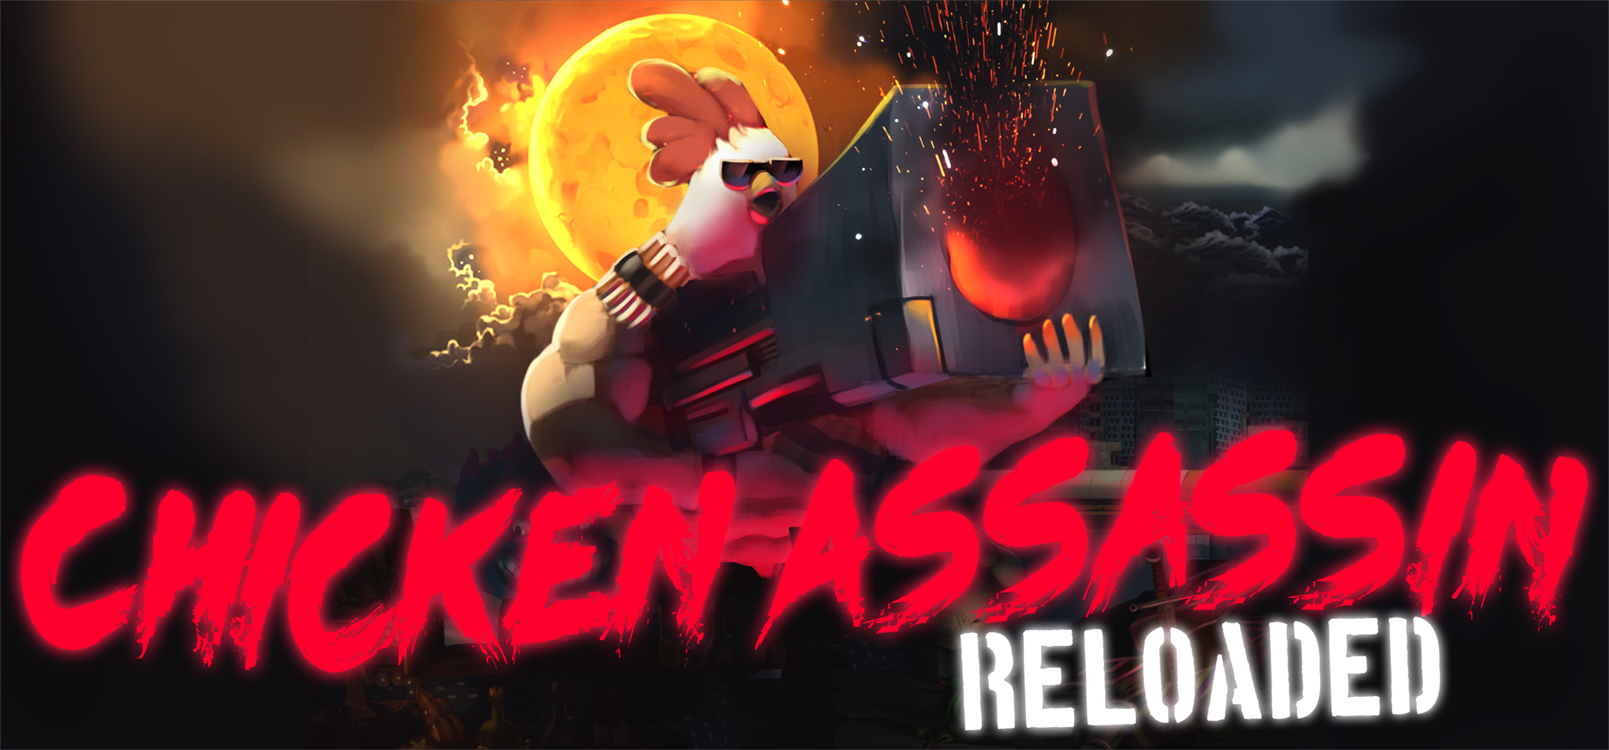 Chicken Assassin: Reloaded - PC Steam